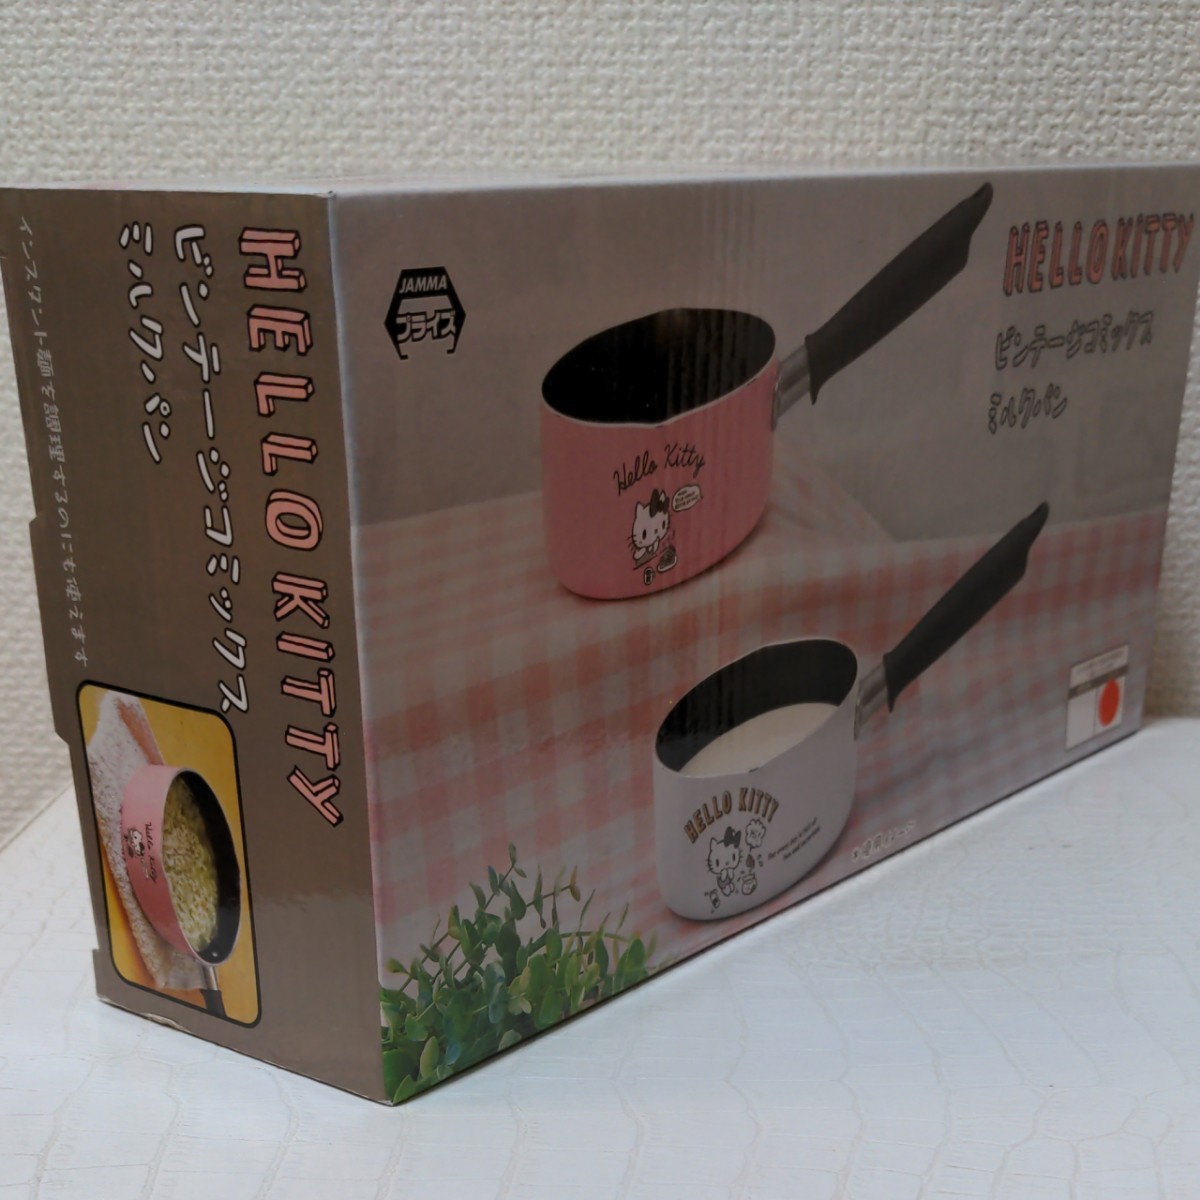 HELLO KITTY ビンテージコミックスミルクパン （ピンク） 【 サンリオ ハローキティ 】